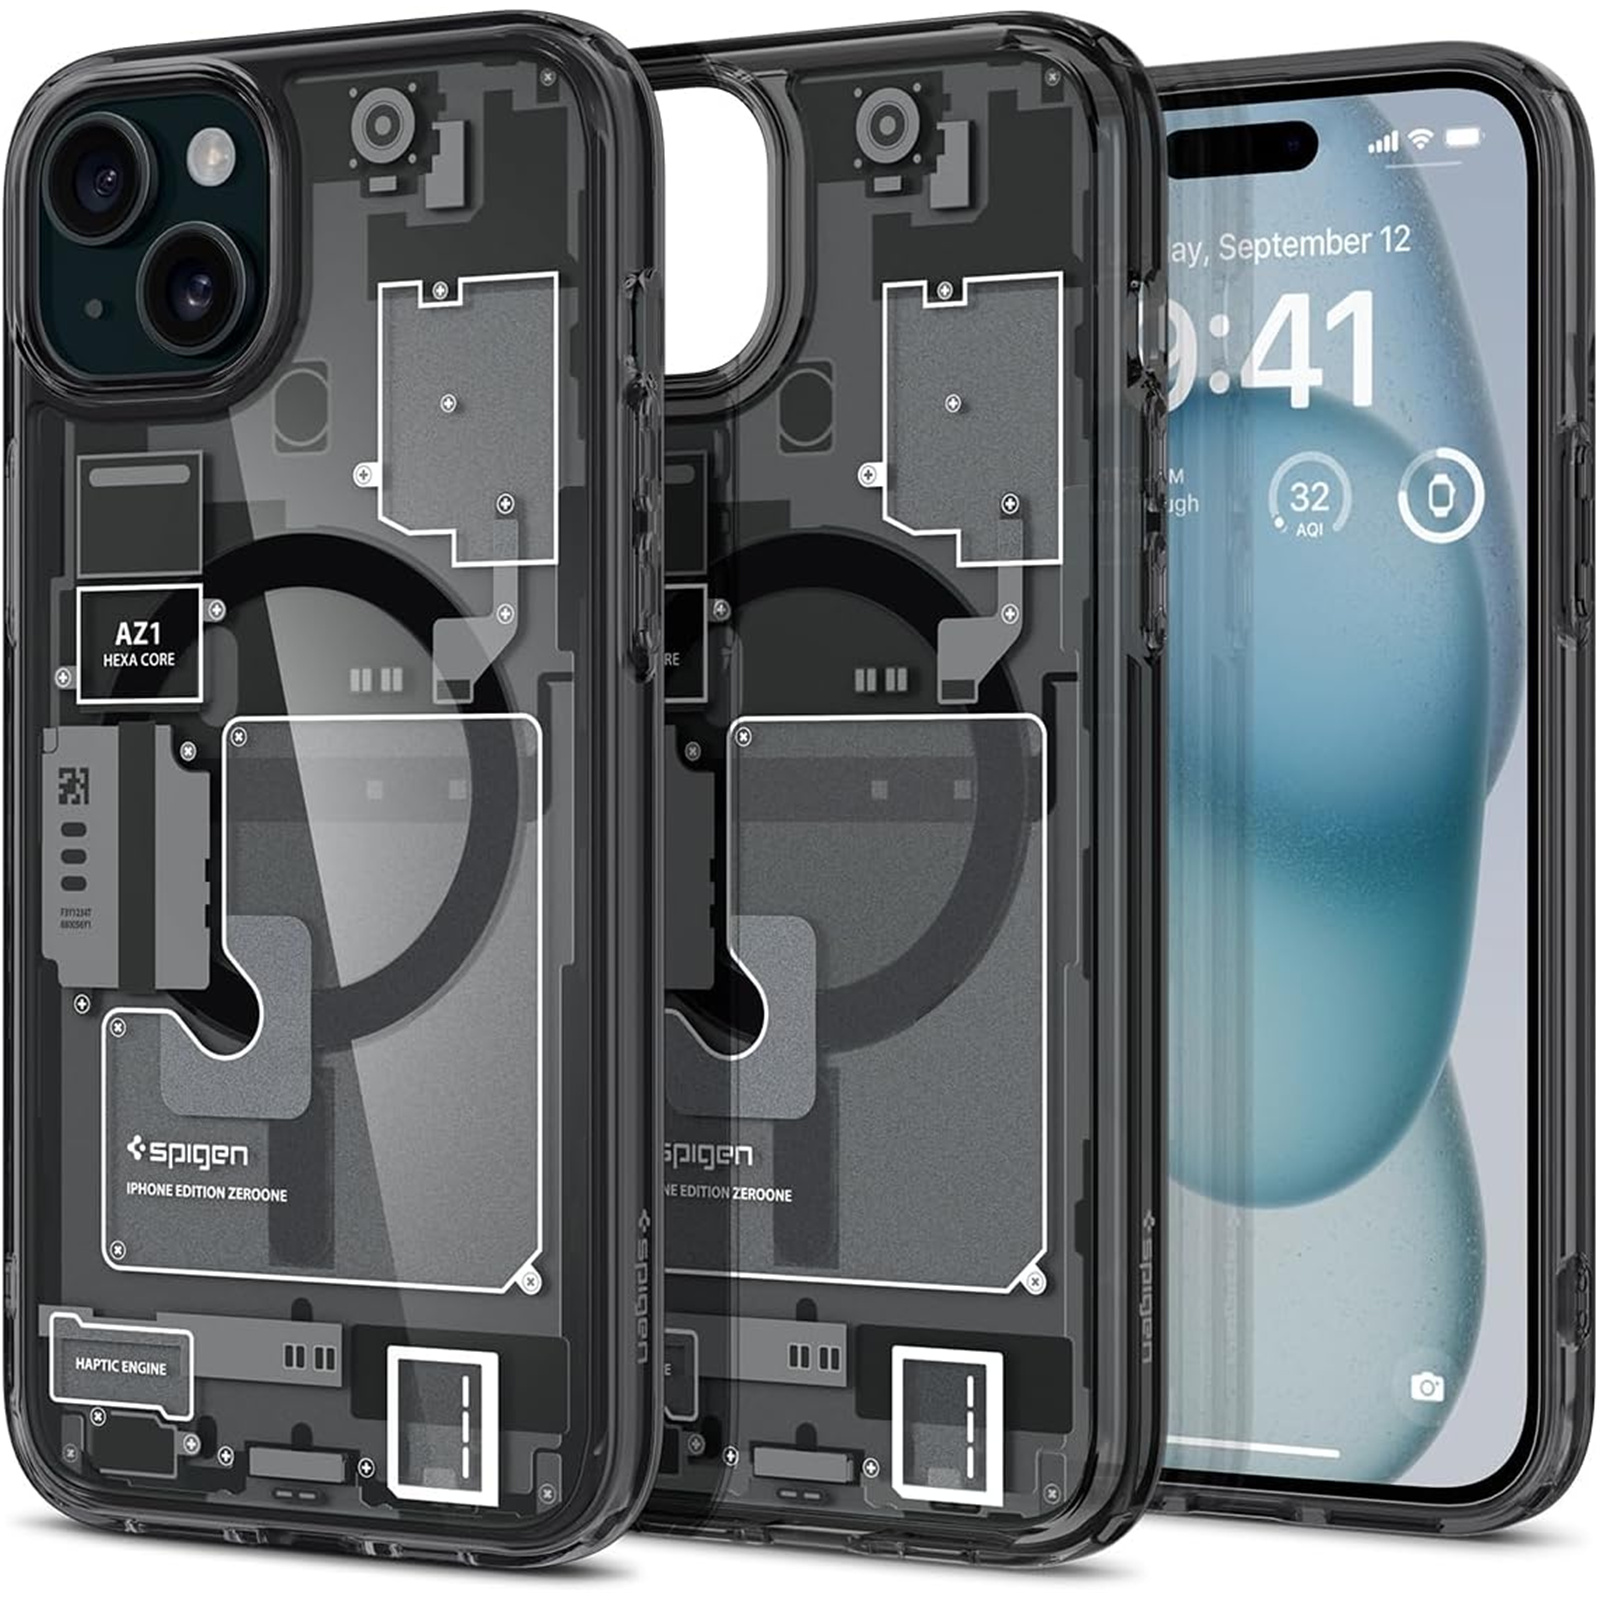 iPhone 12 Mini Case Ultra Hybrid Mag (MagFit)